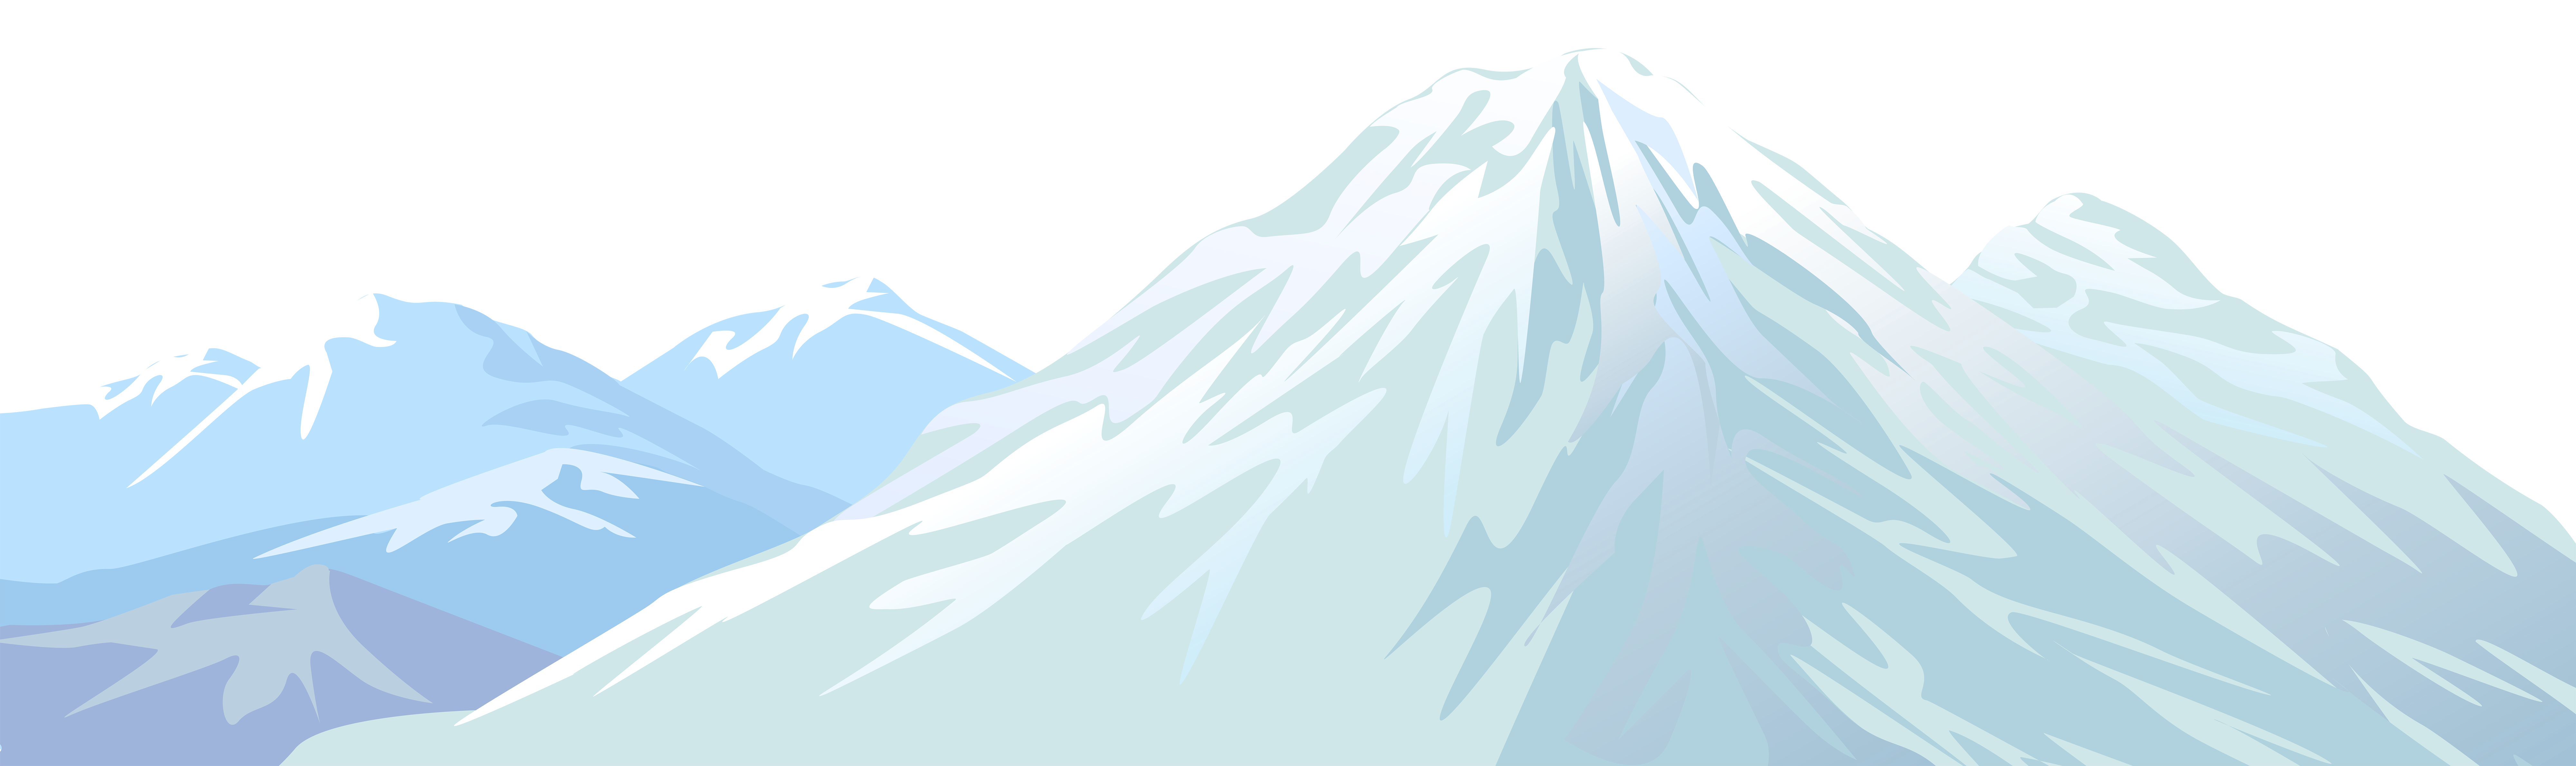 hill clipart snowy mountain